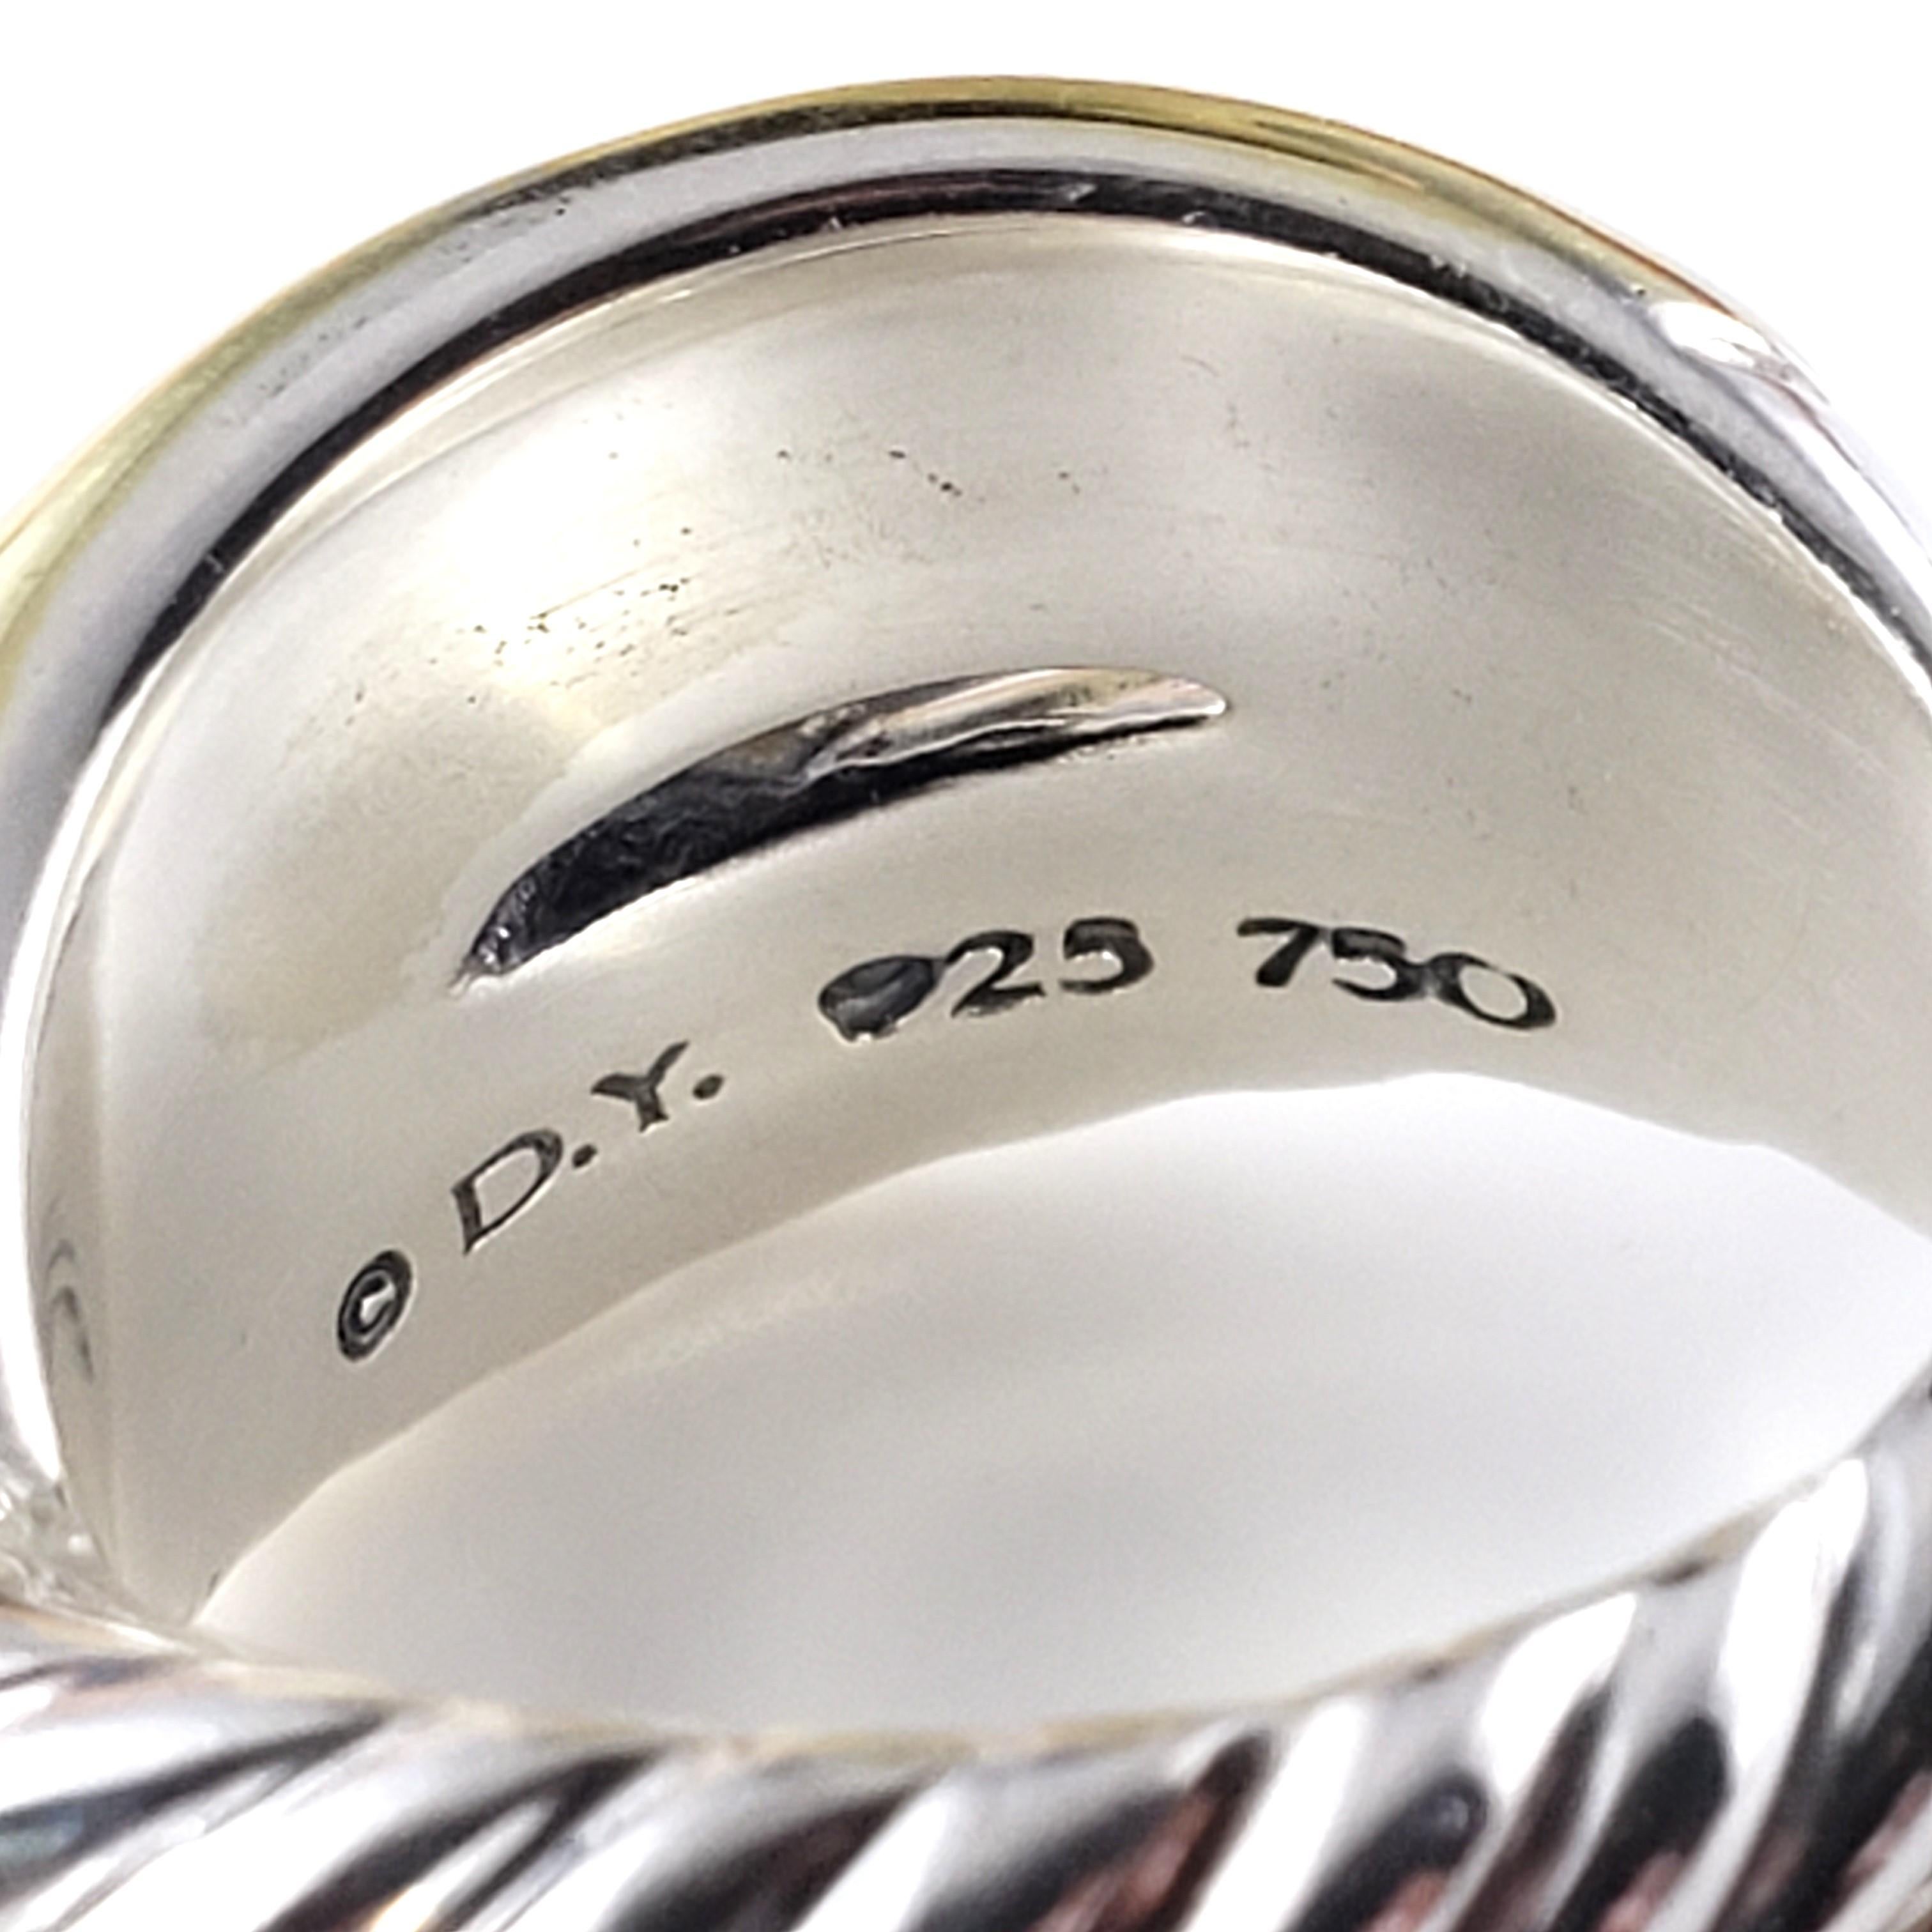 David Yurman Sterling Silver and 18K Yellow Gold Ring Size 6 #15399 1